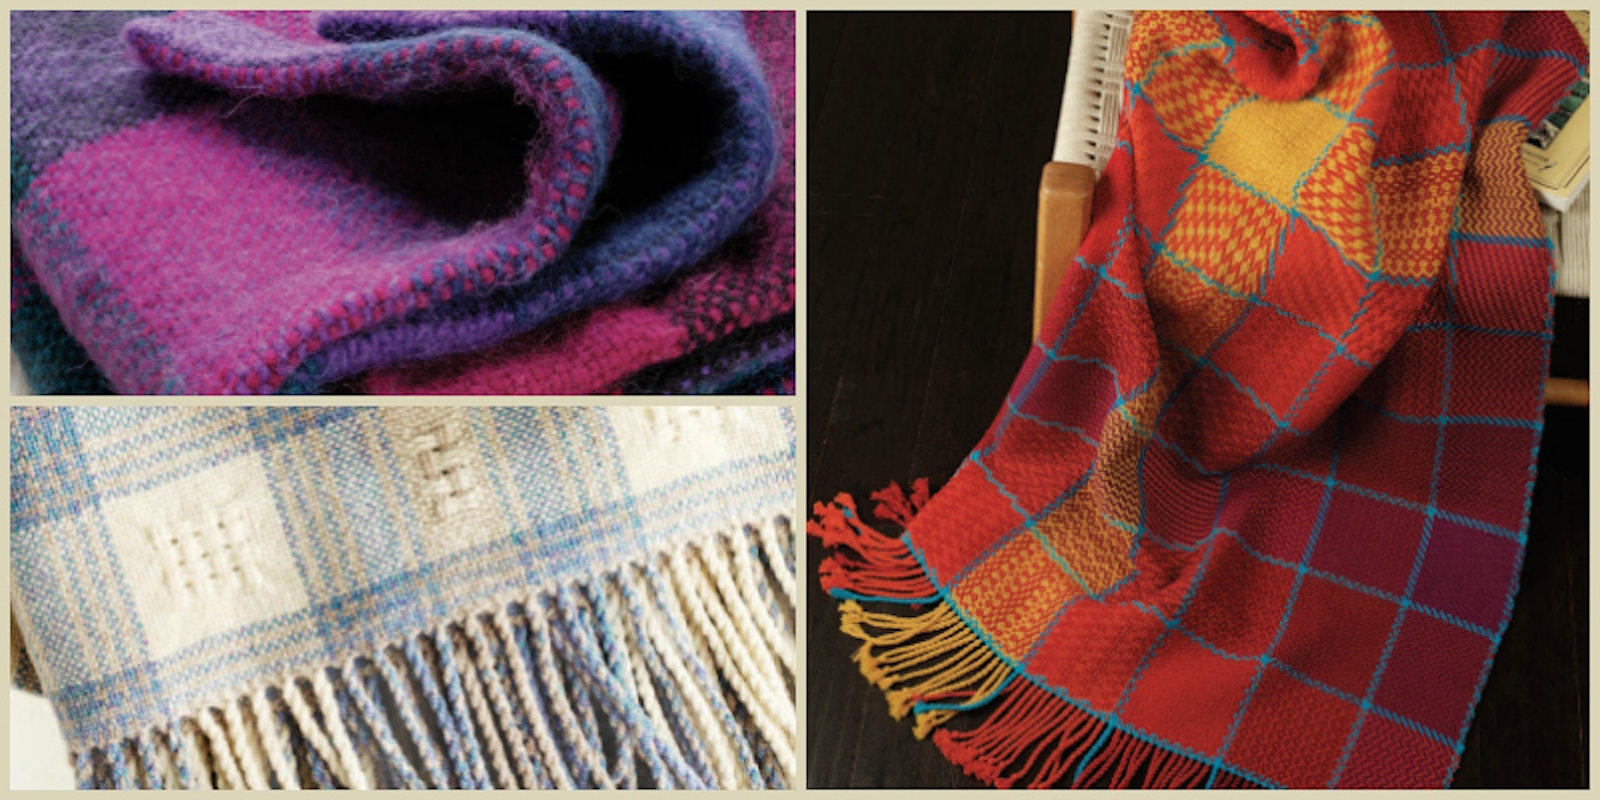 Weave your own woollen blanket - The Good Yarn